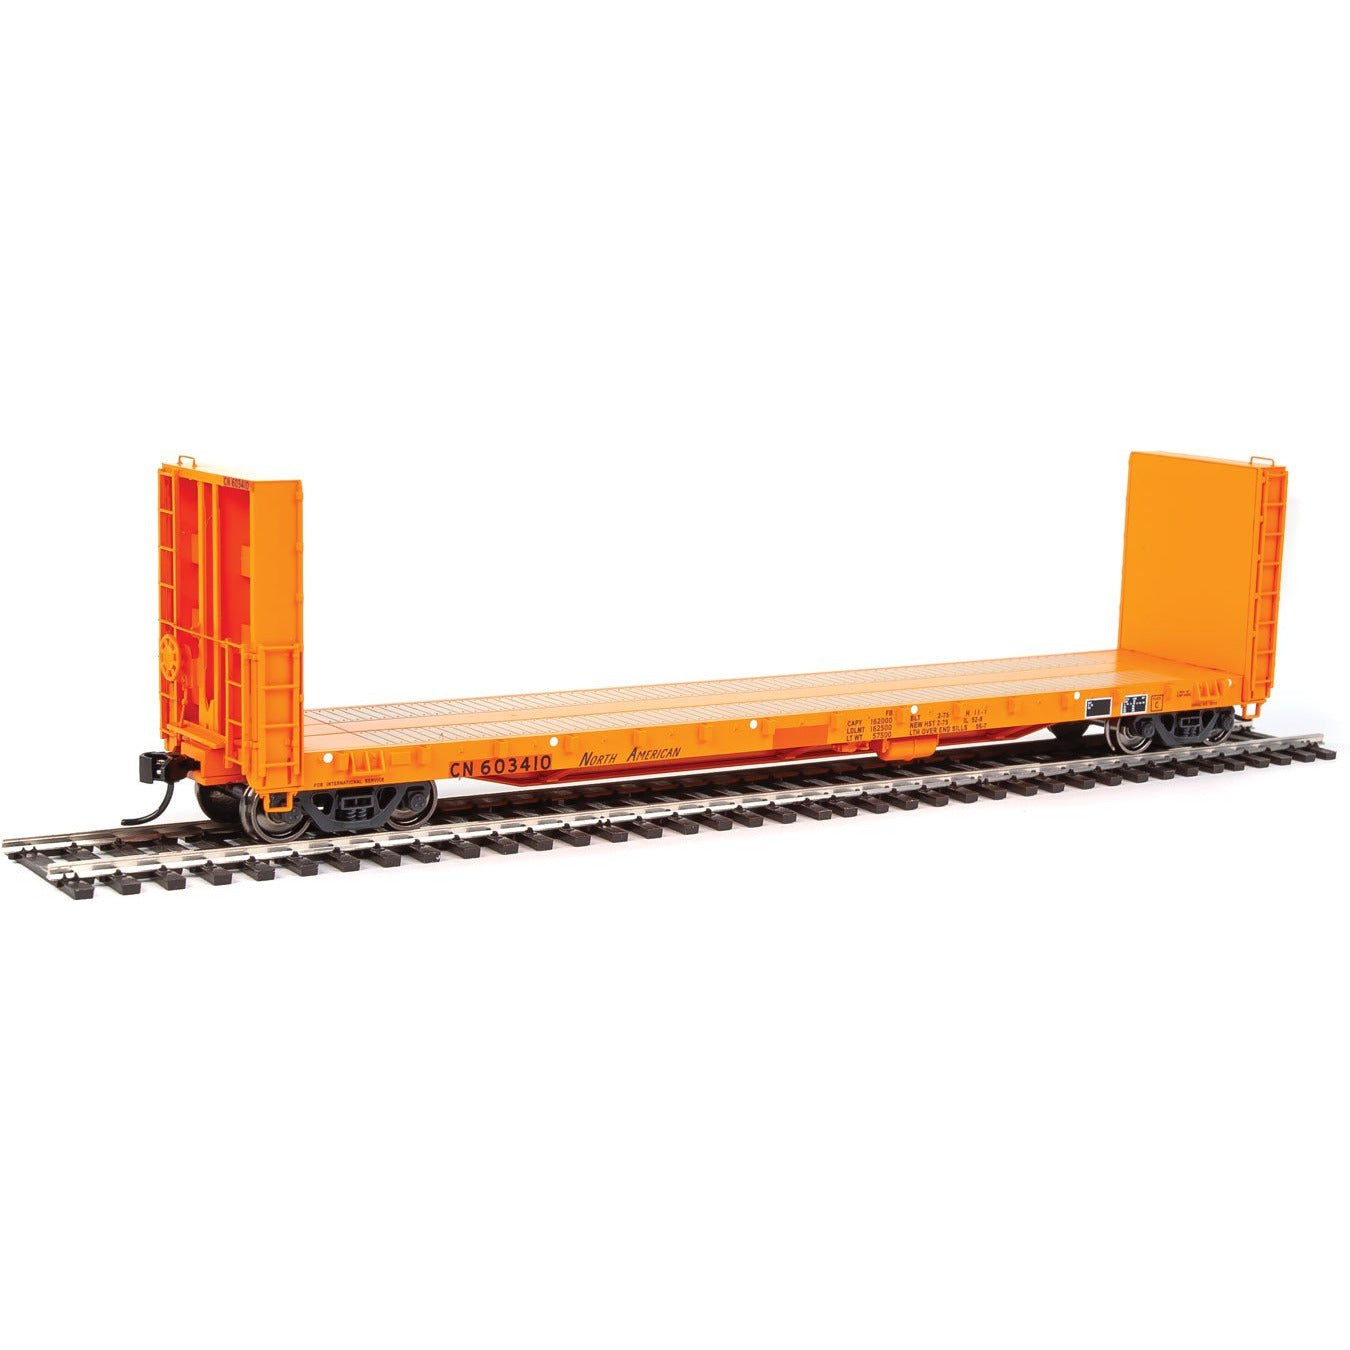 50' CC&F Bulkhead Flatcar - Ready to Run -- Canadian National #603415 (orange patch)